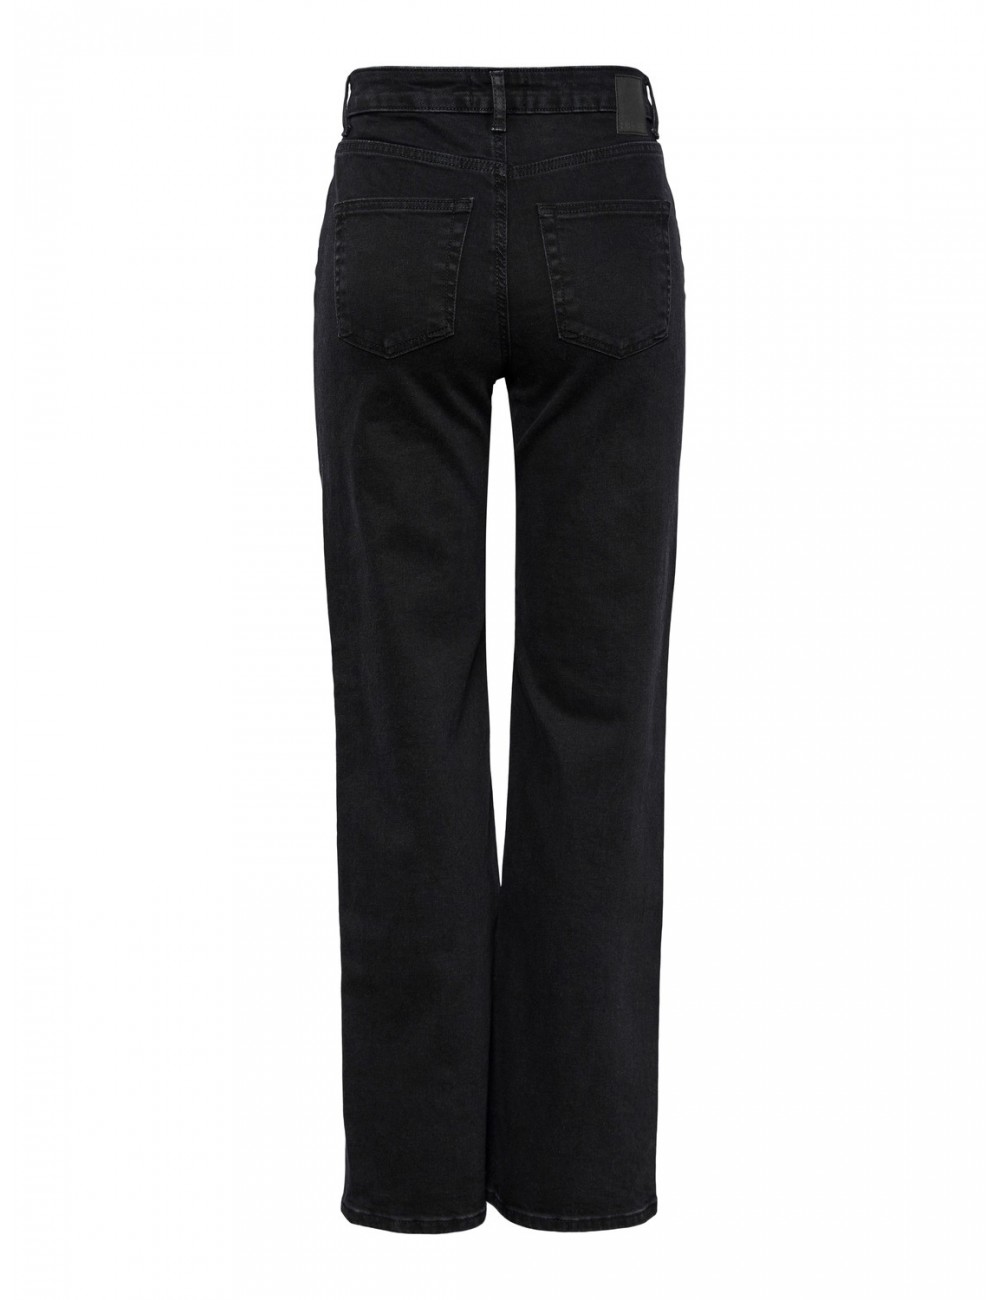 Pantalón Jeans Cholly en color negro lavado de pata ancha. Marca Pieces.